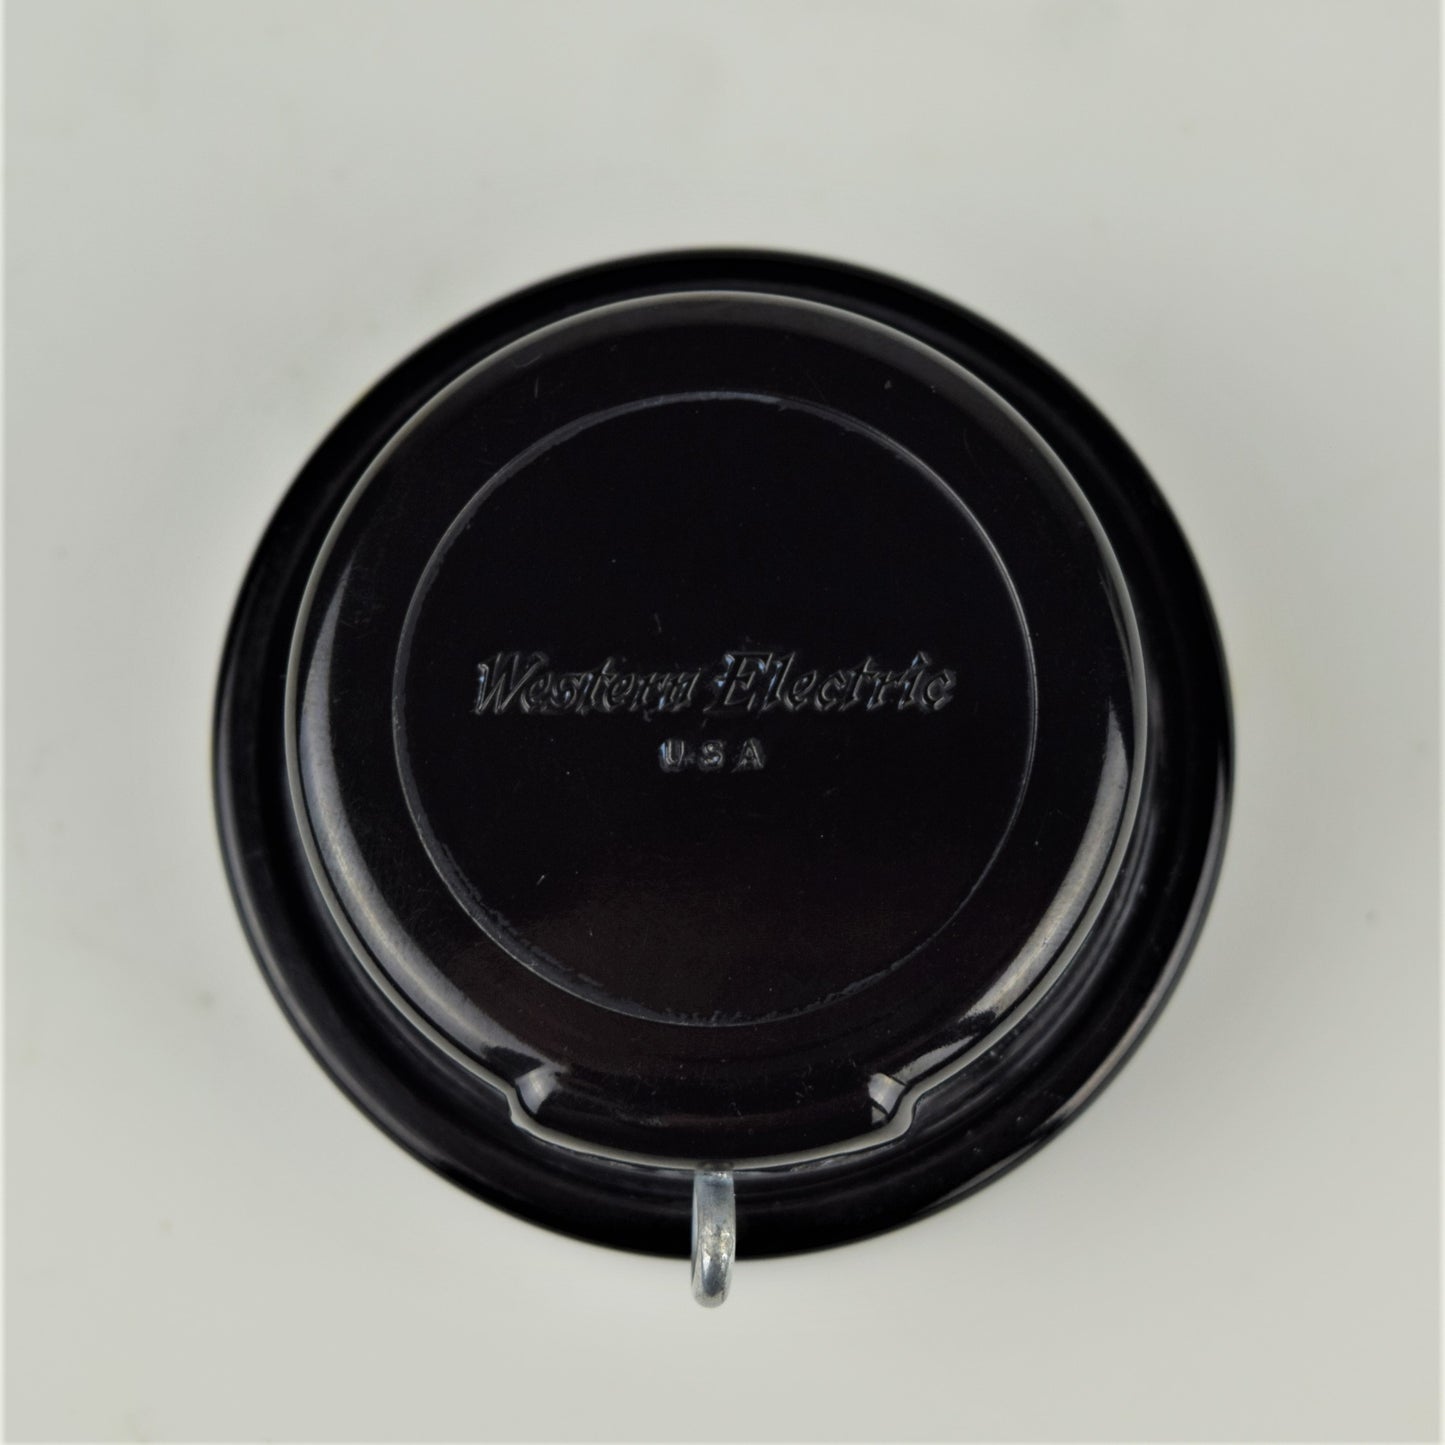 Western Electric - Watch Case Receiver